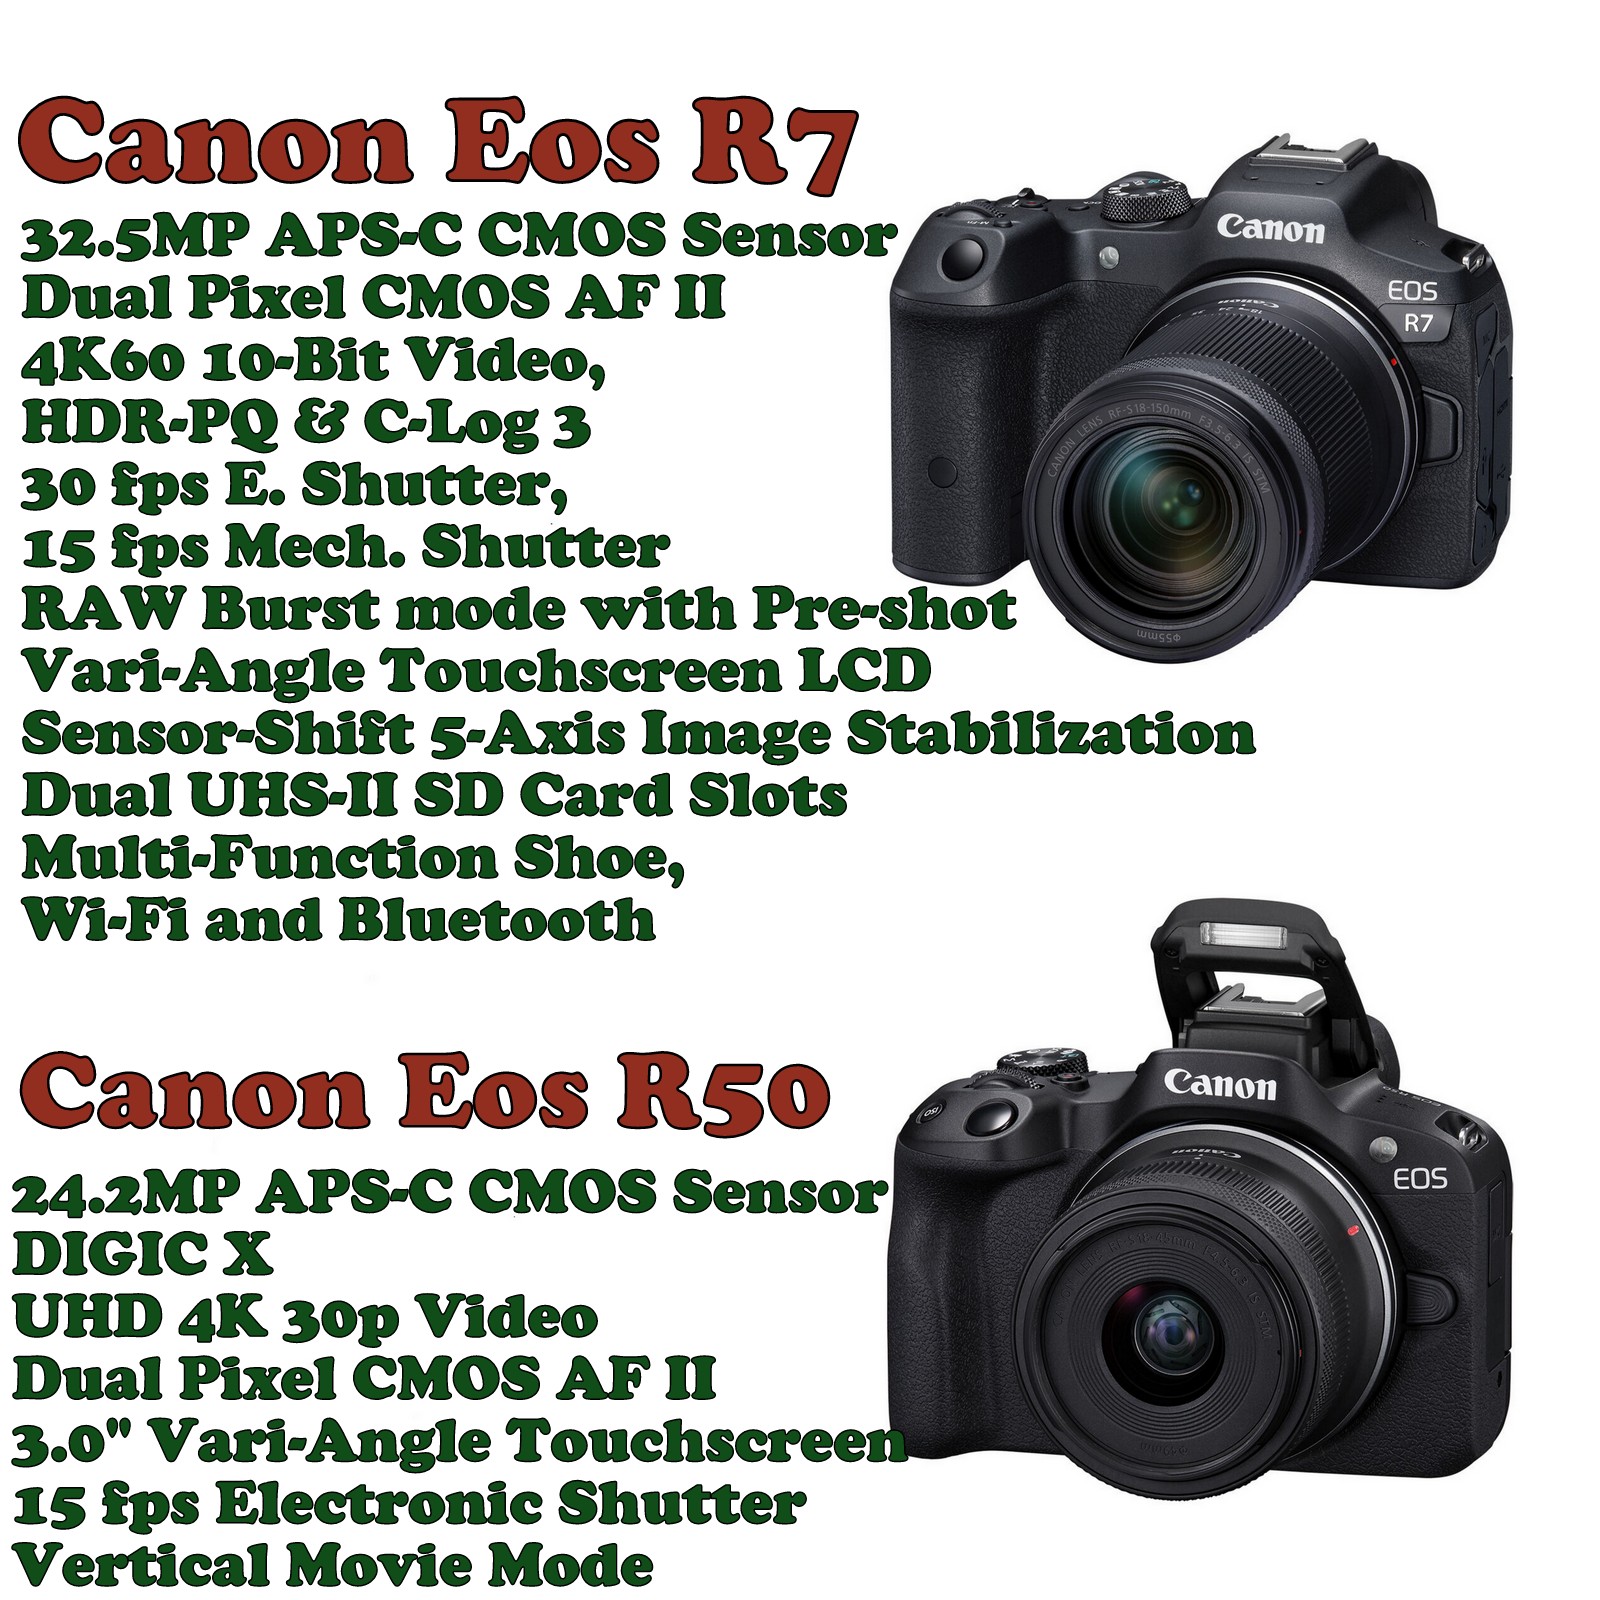 New Canon Eos Mirrorless APSC camera available now Canon Eos R7 & Eos R50